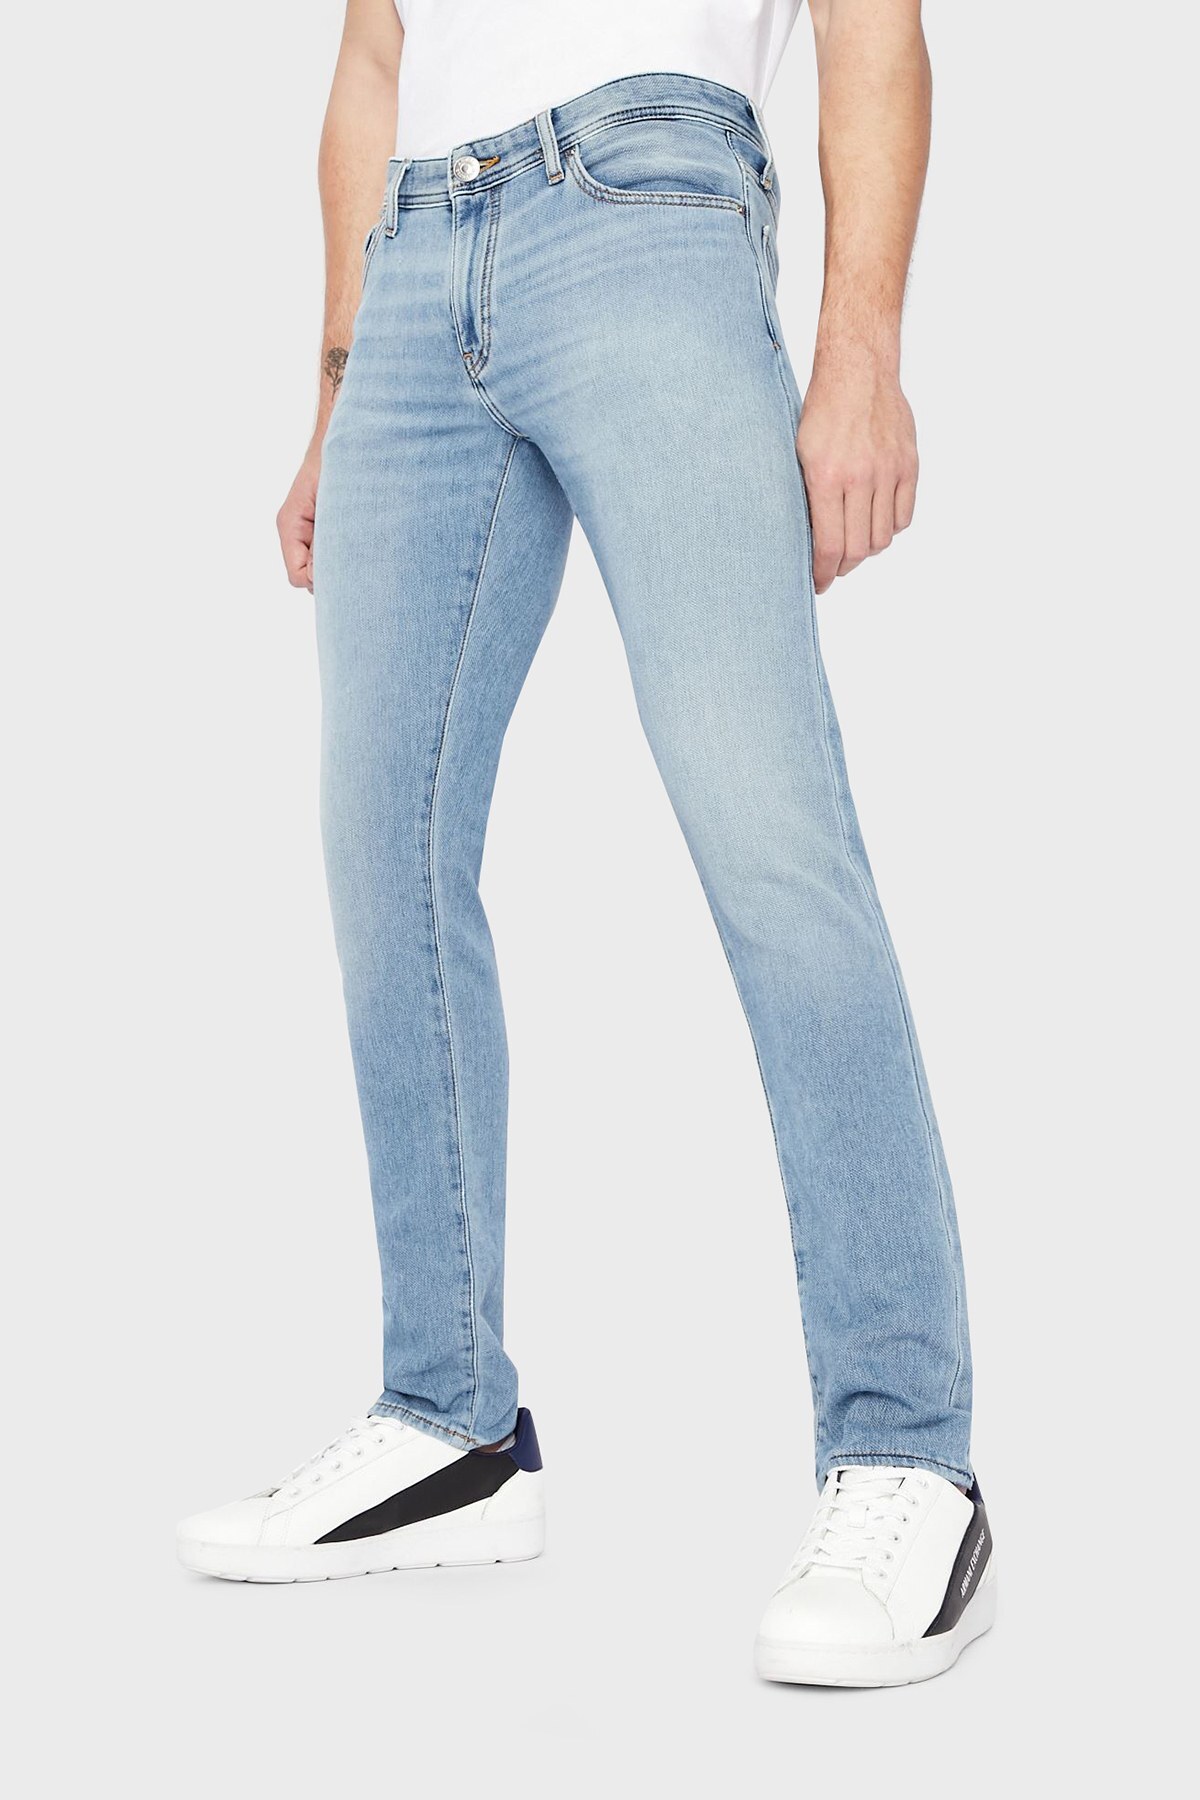 Armani Exchange J14 Streç Pamuklu Normal Bel Skinny Fit Jeans Erkek Kot Pantolon 3LZJ14 ZAP6Z 1500 AÇIK MAVİ